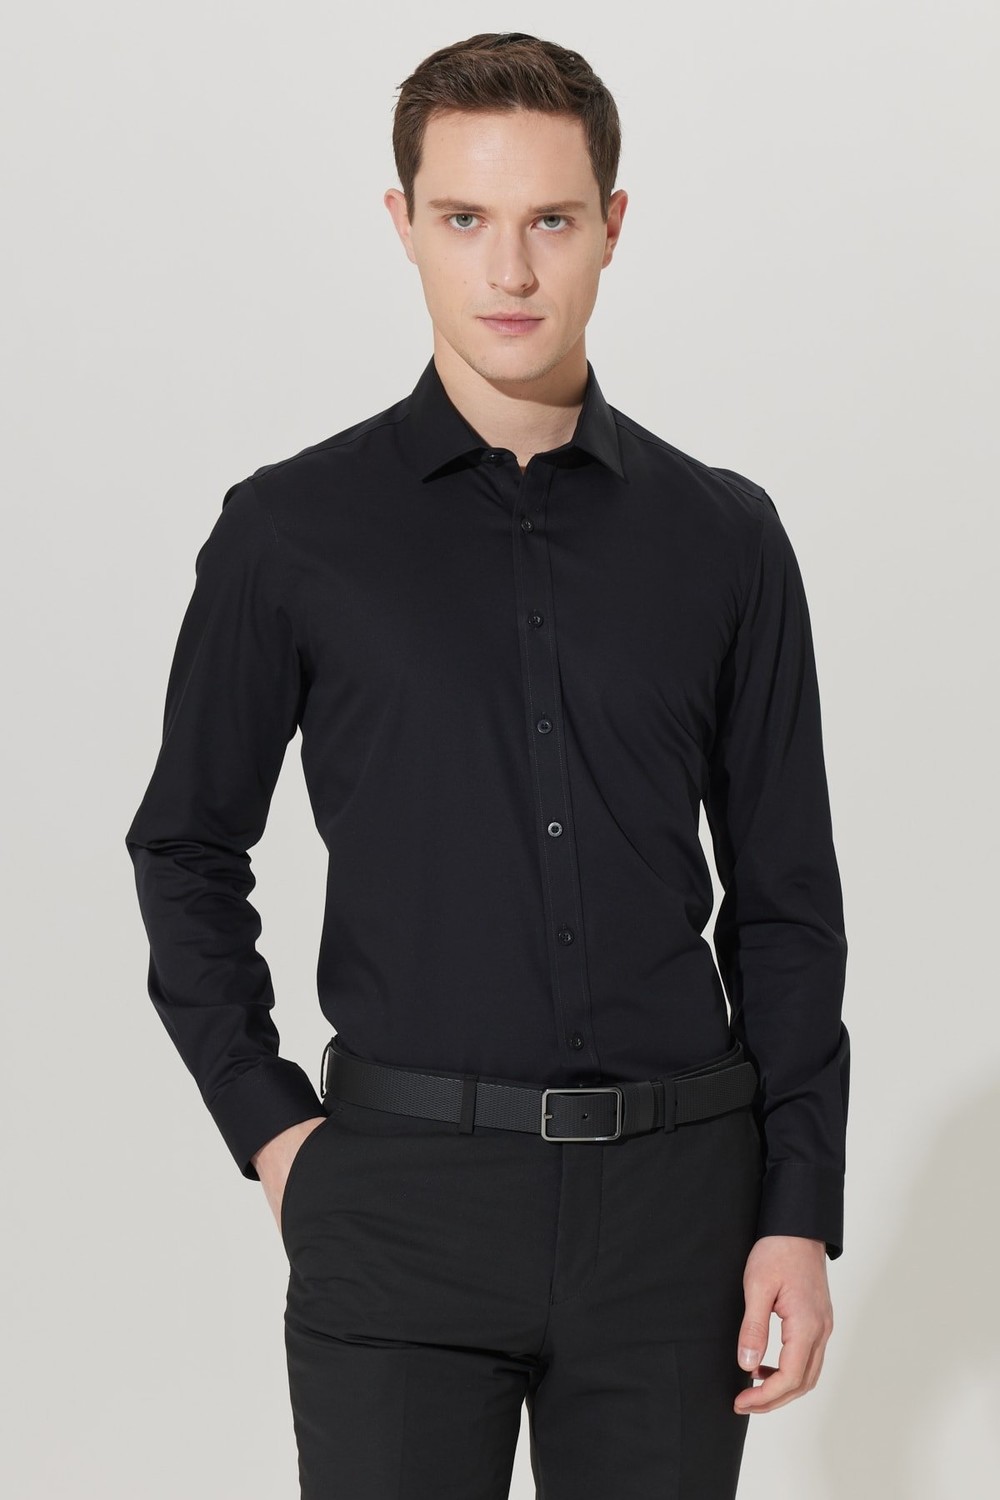 ALTINYILDIZ CLASSICS Men's Black No-Iron Non-iron Slim Fit Slim Fit 100% Cotton Shirt.